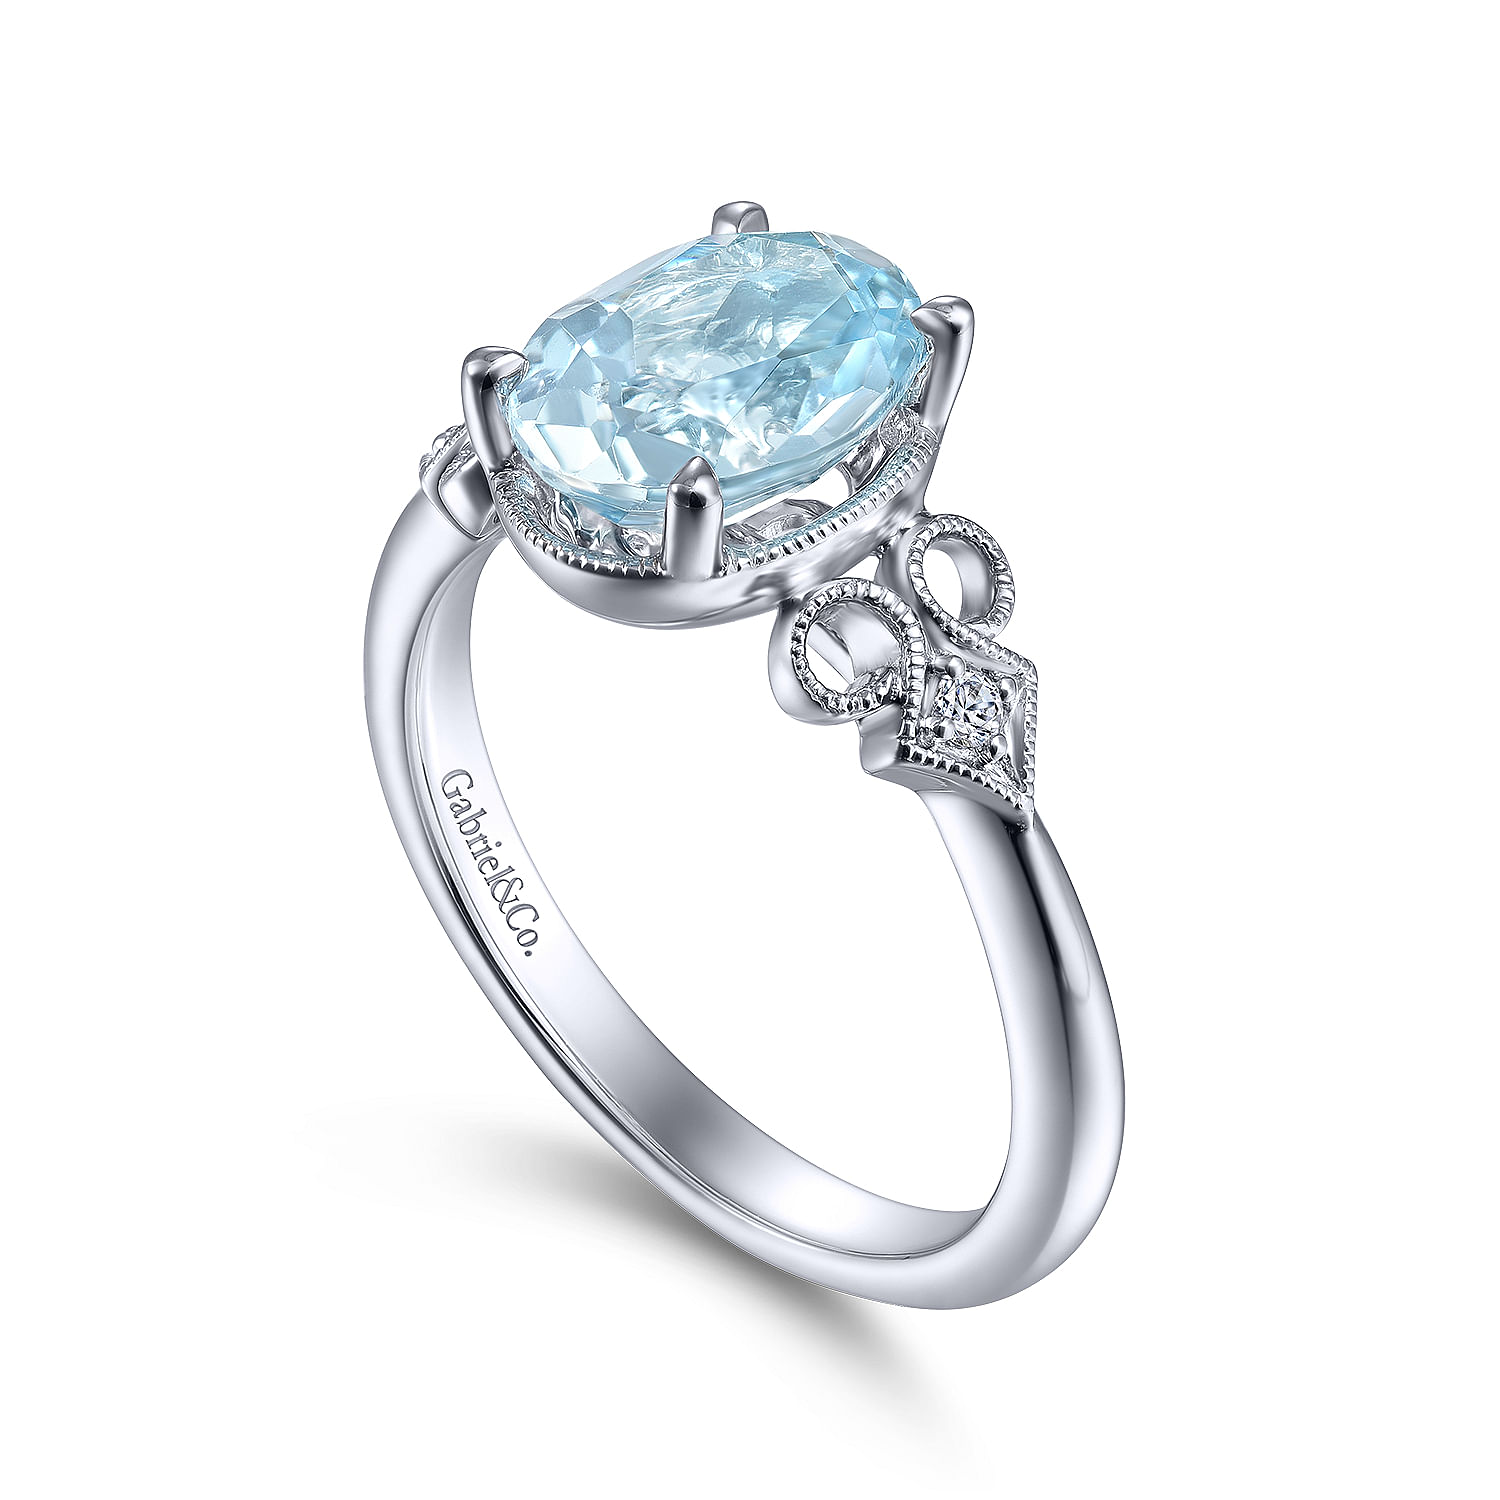 Vintage 14K White Gold Diamond and Sky Blue Topaz Ring